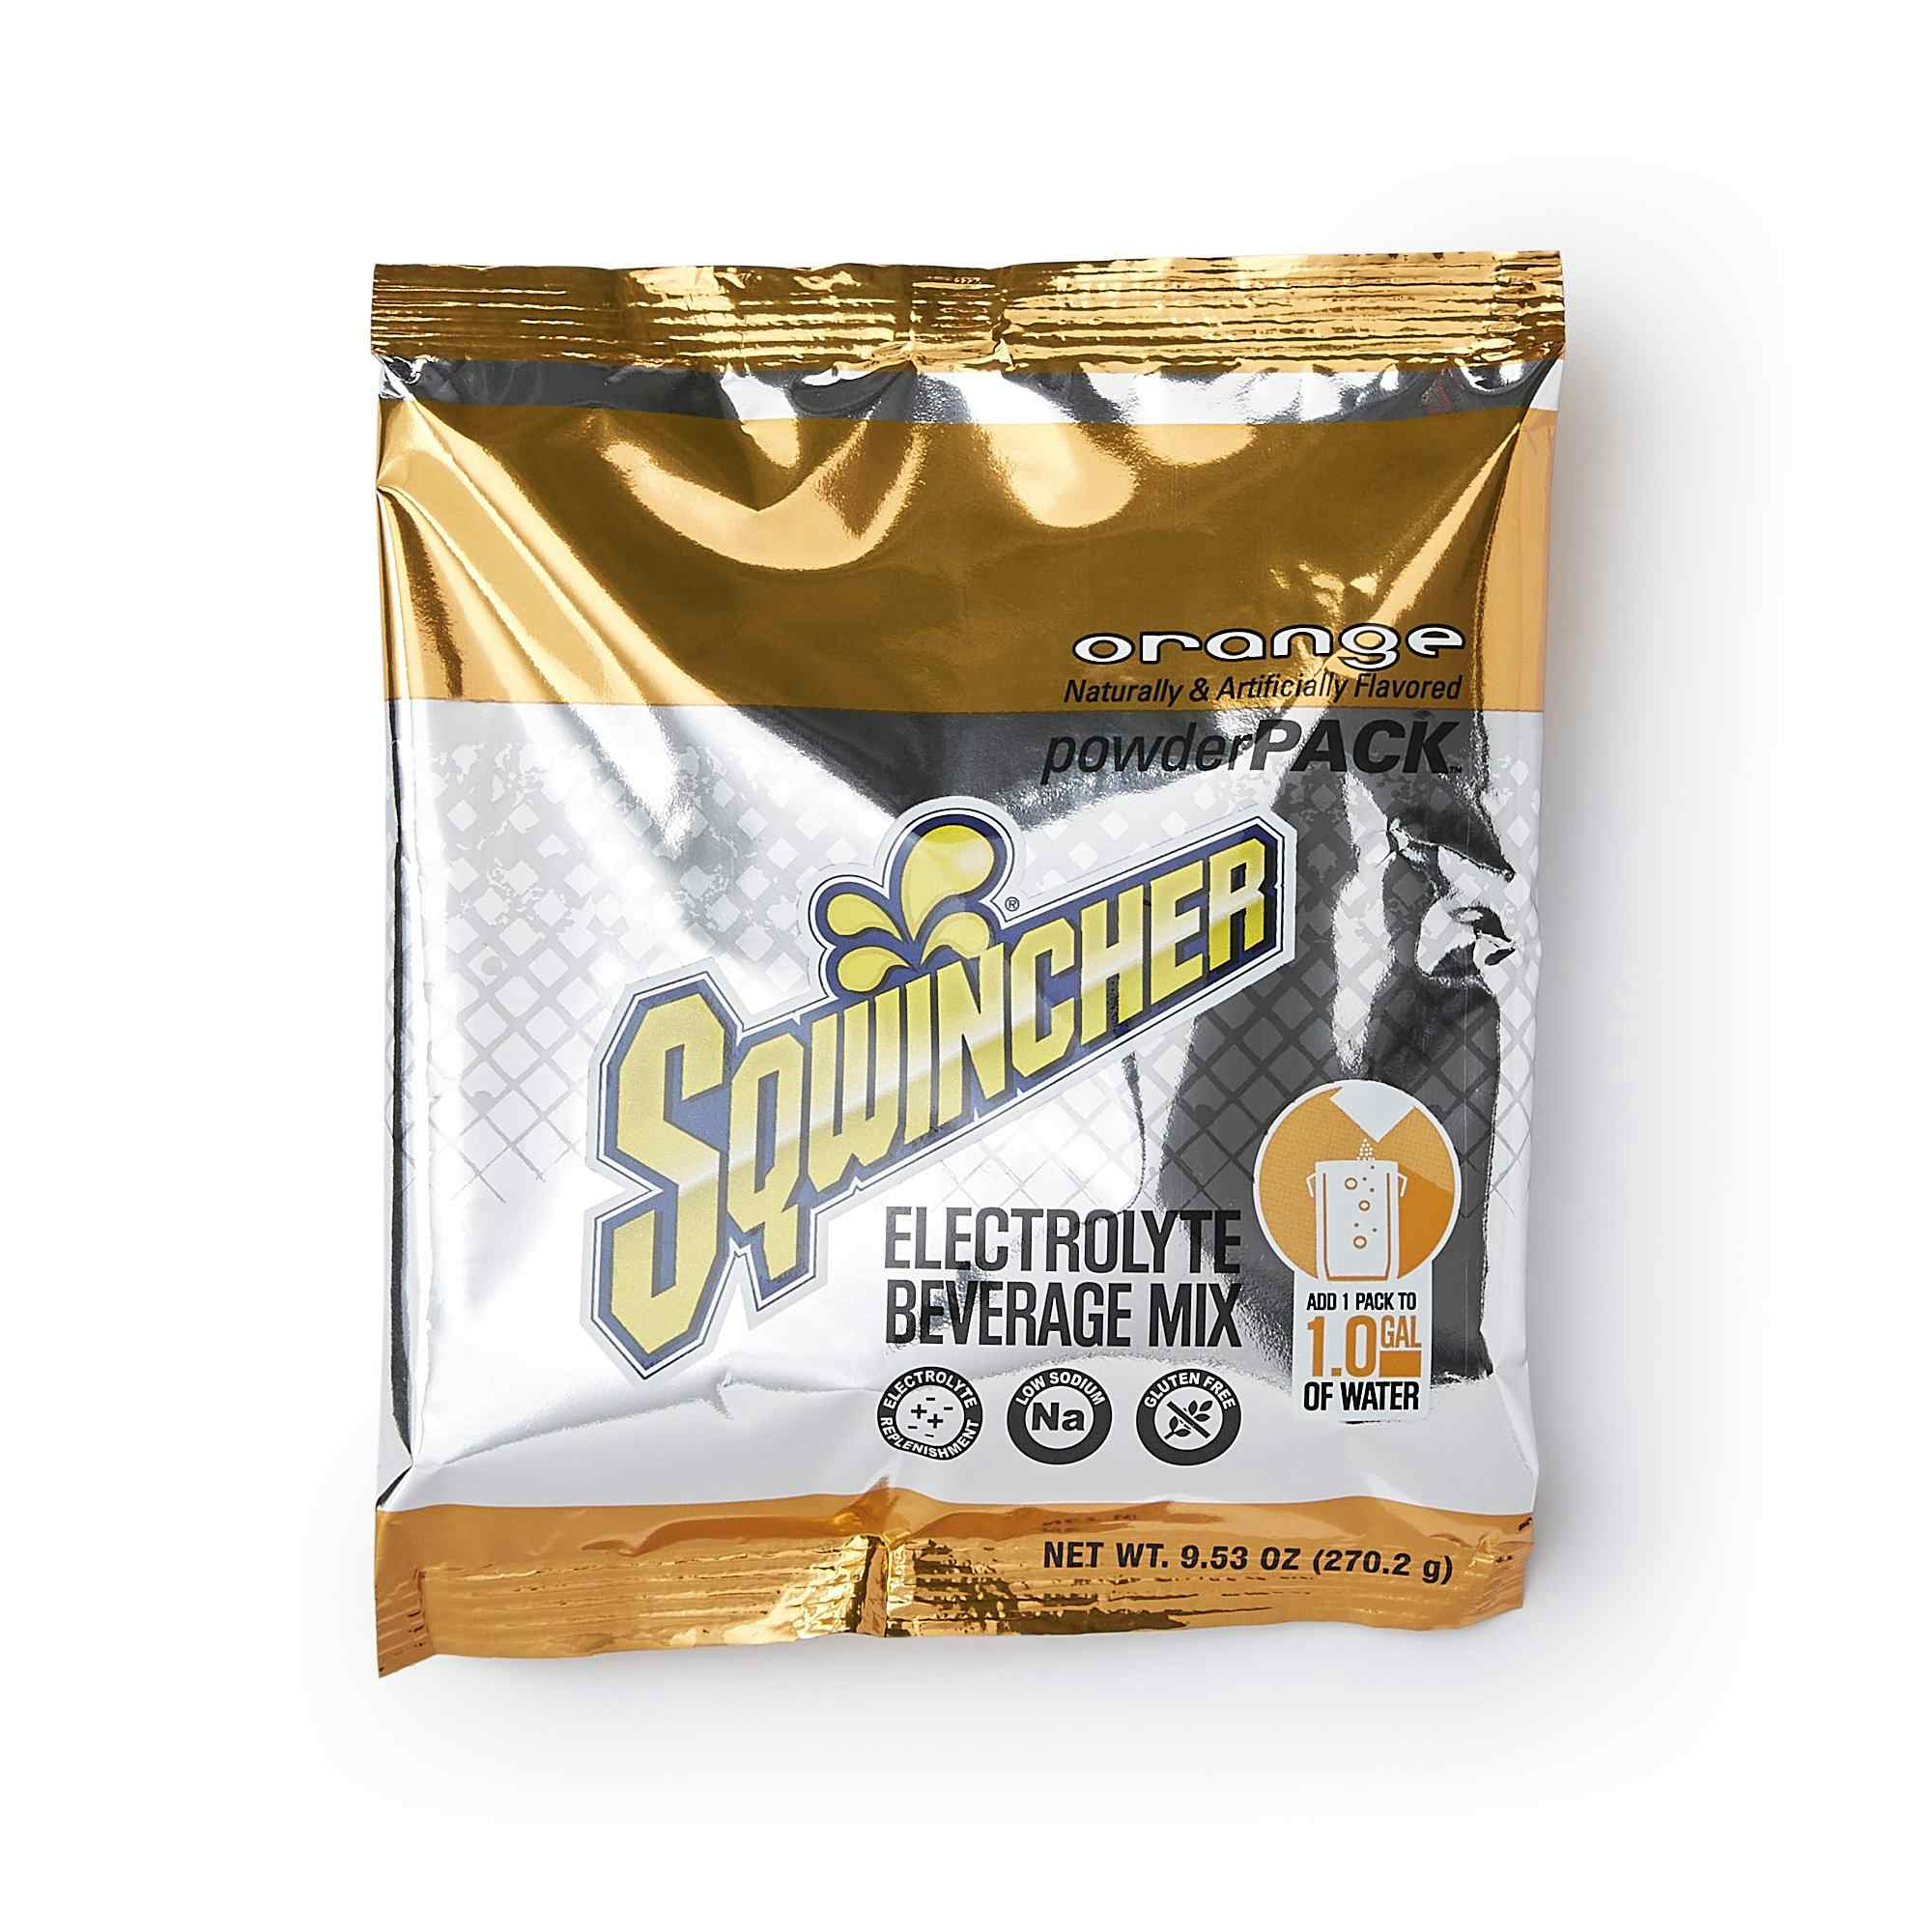 Sqwincher Powder Pack Electrolyte Replenishment Drink Mix, Orange